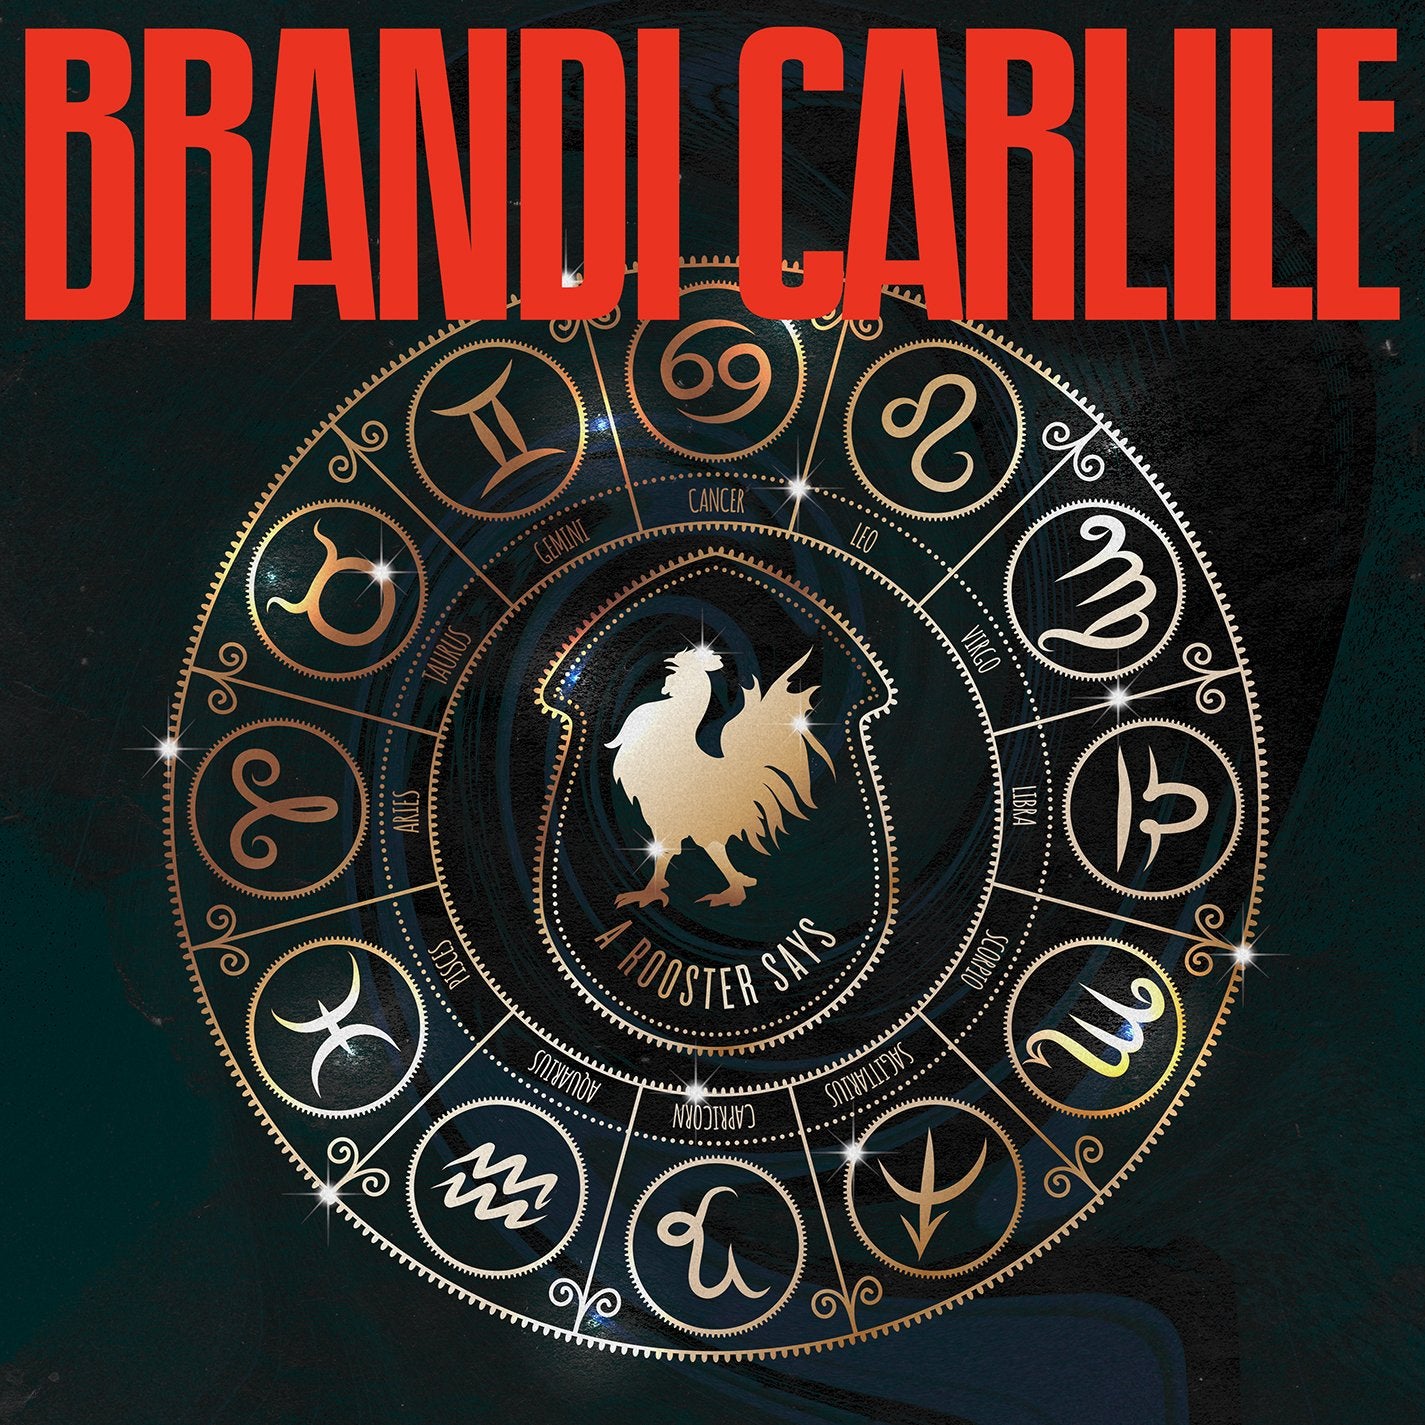 Brandi Carlile - Black Hole Sun / Searching With My Good Eye Closed